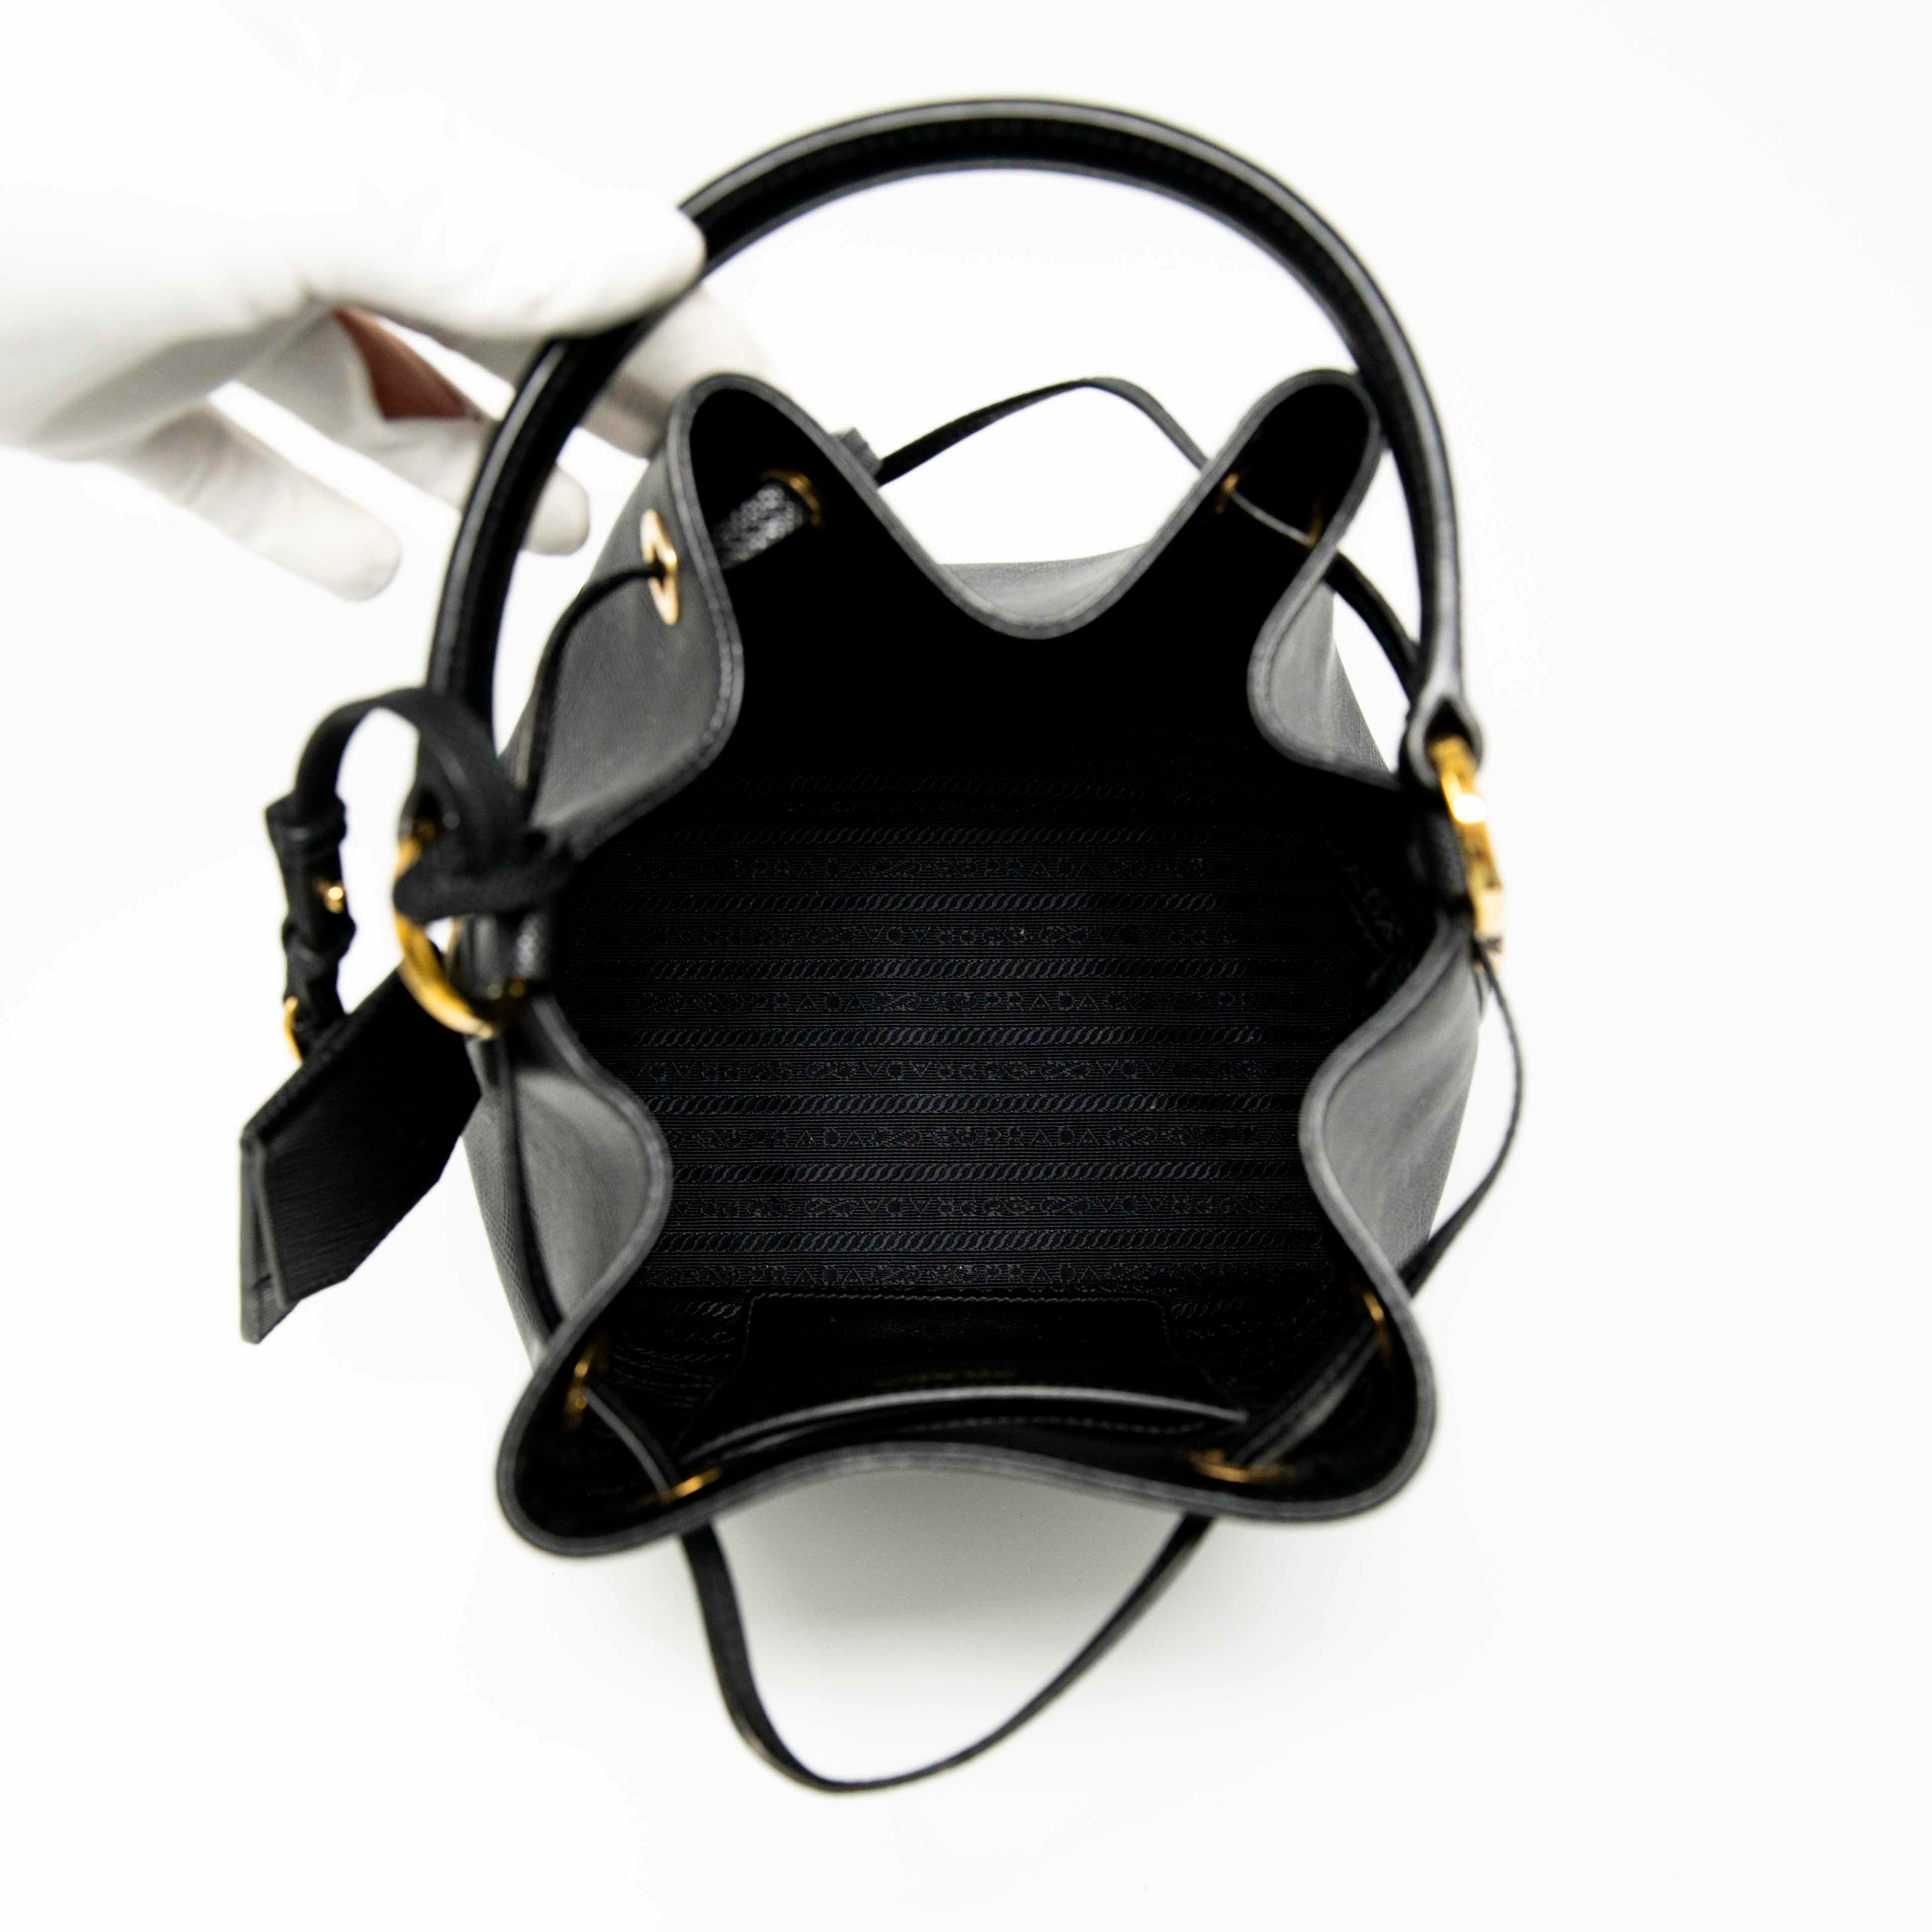 Prada Black Saffiano Small Bucket Bag